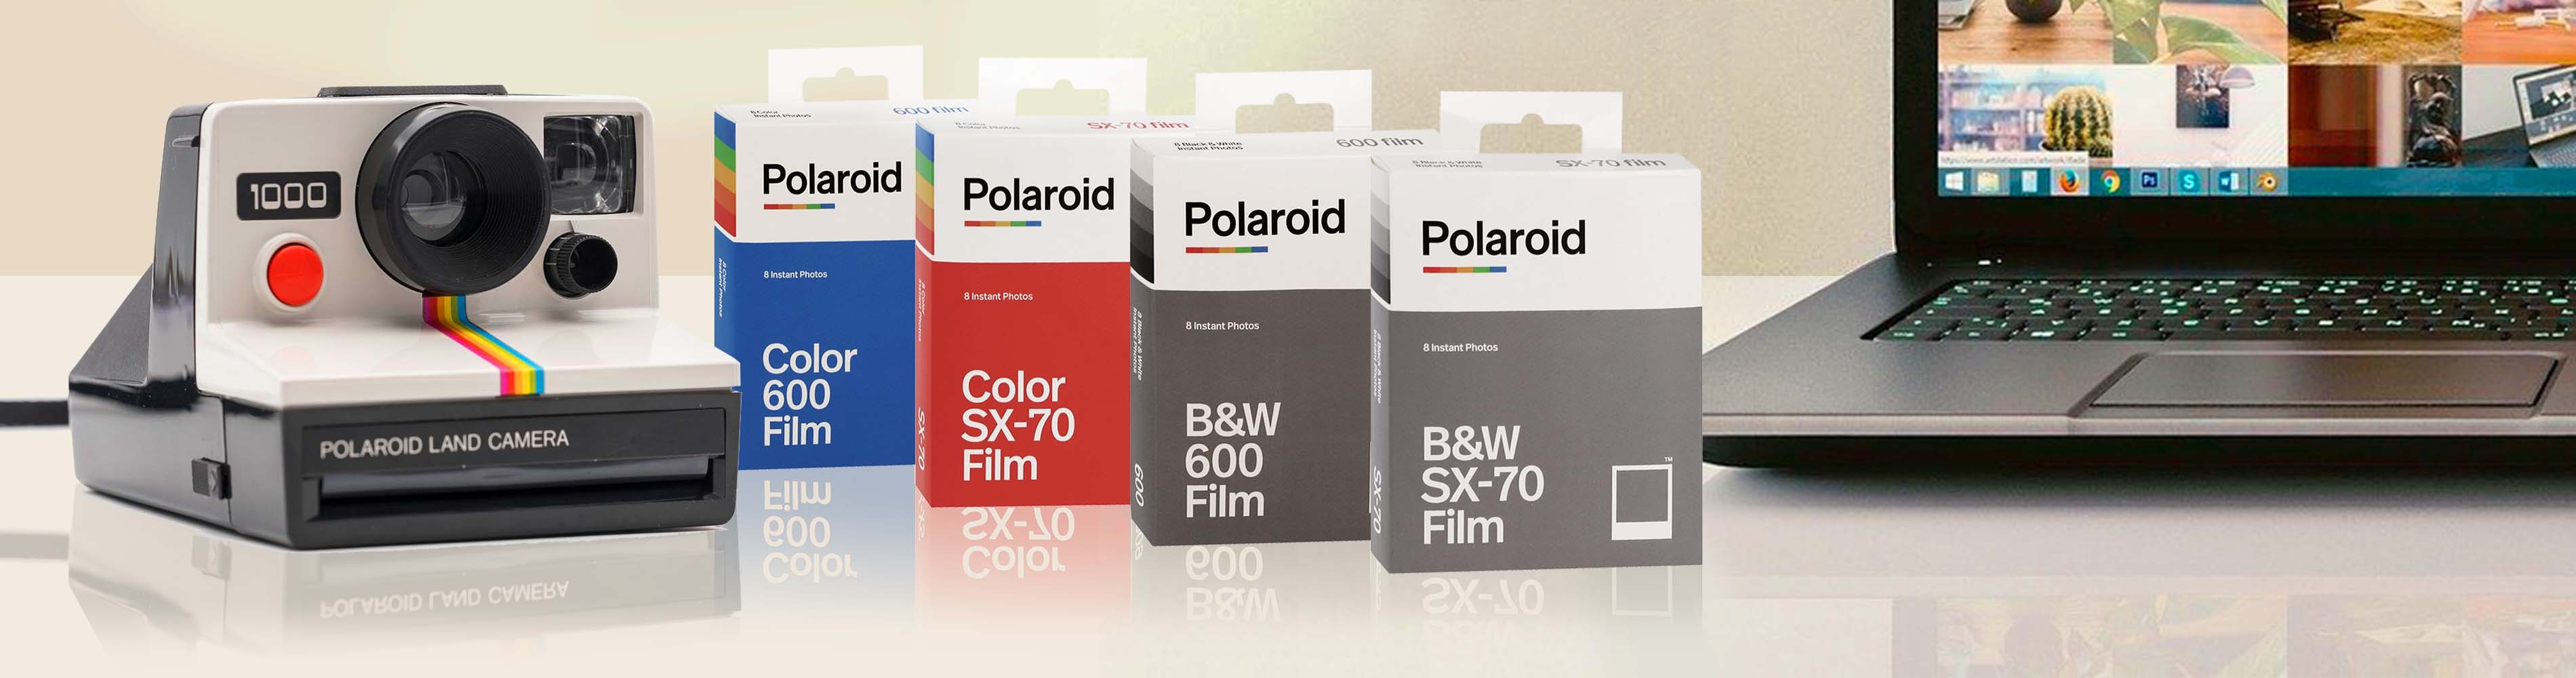 Consommable Pellicule Polaroid Originals Film instantané 600 color